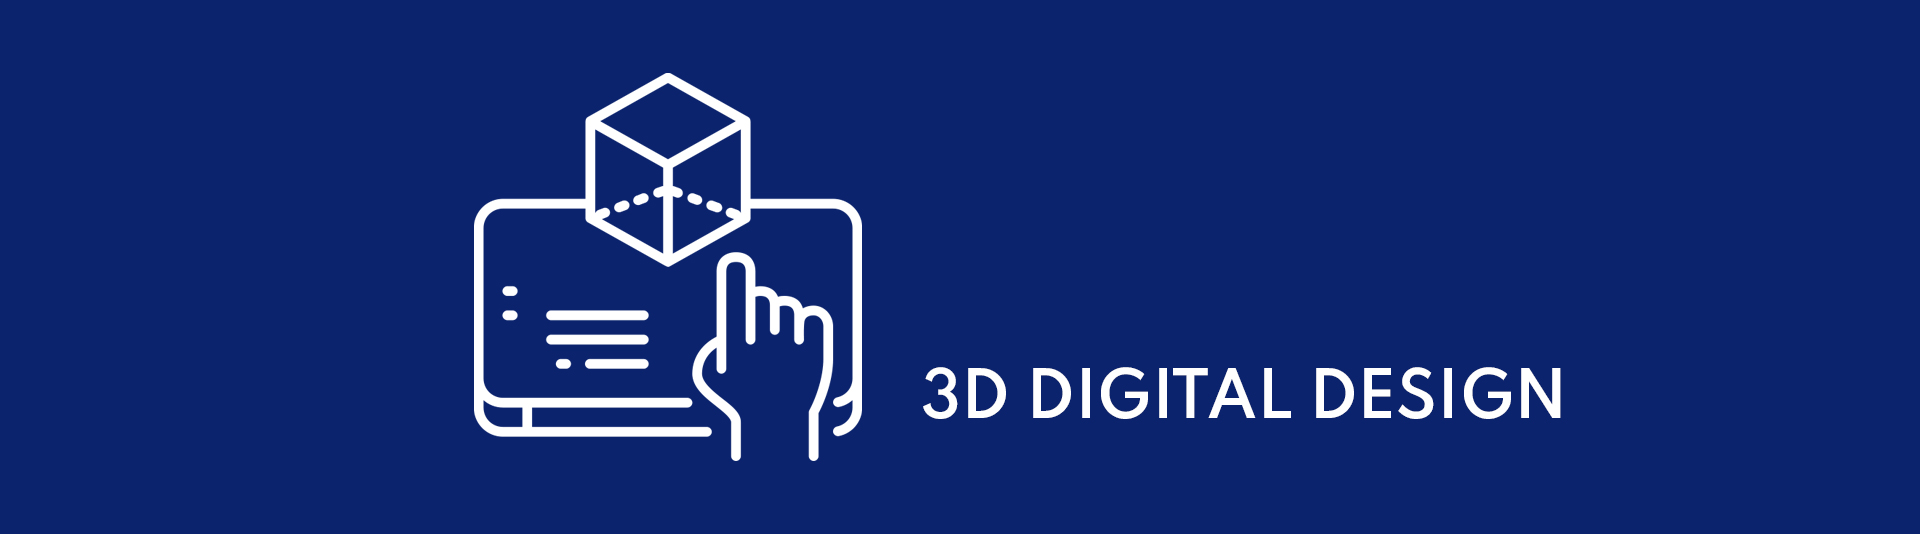 3D Digital Design